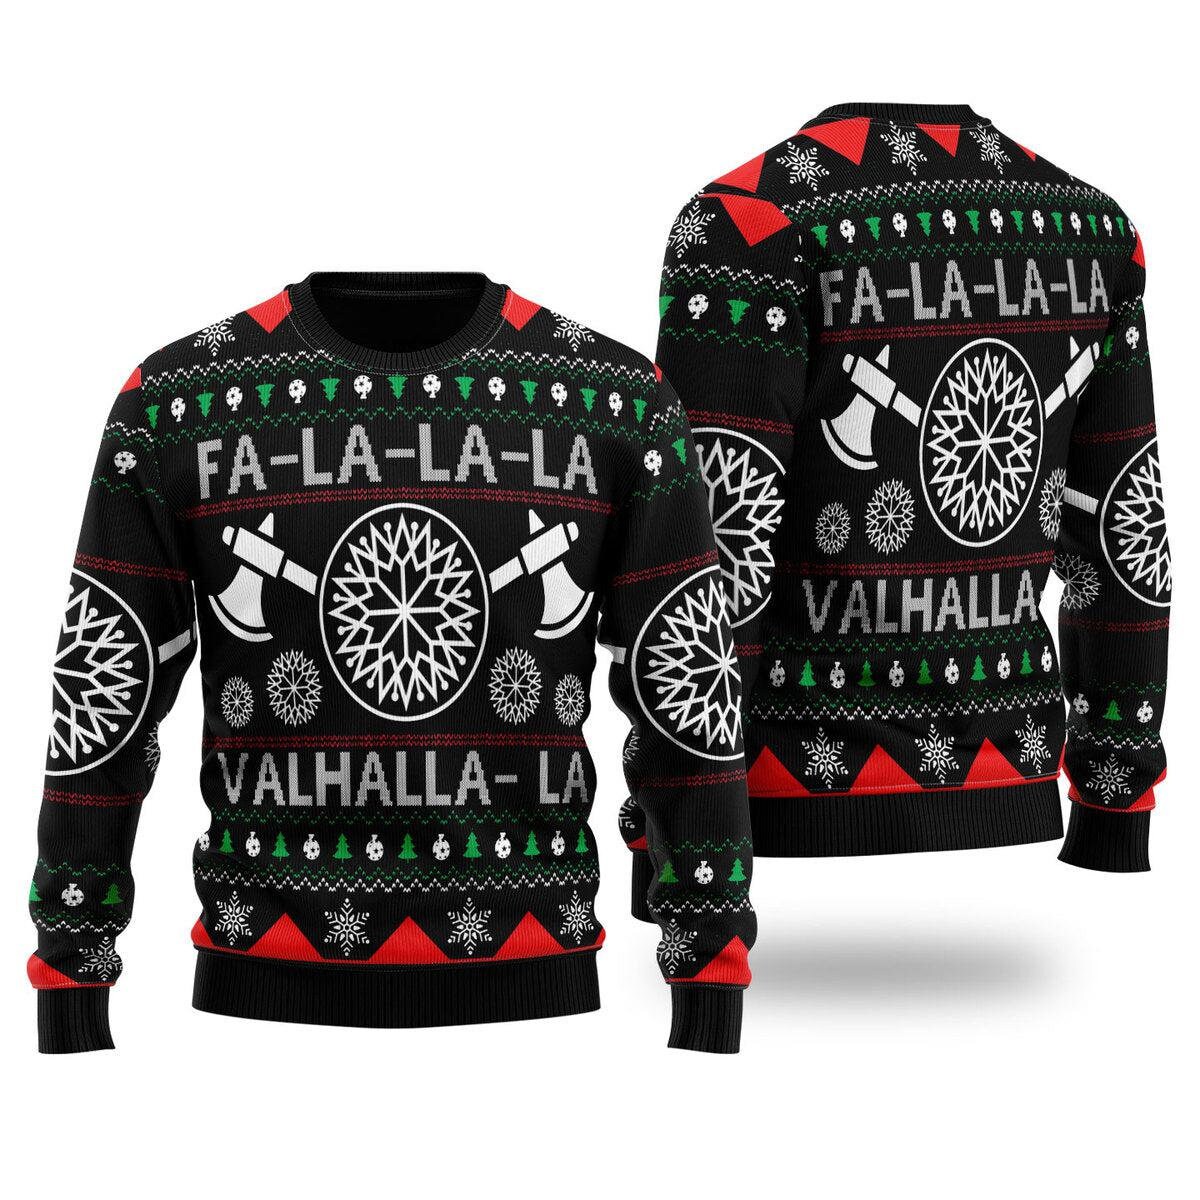 Discover Viking Valhalla Xmas Ugly Christmas Sweater Christmas sweater women funny, Ugly Christmas sweater men funny For Men & Women